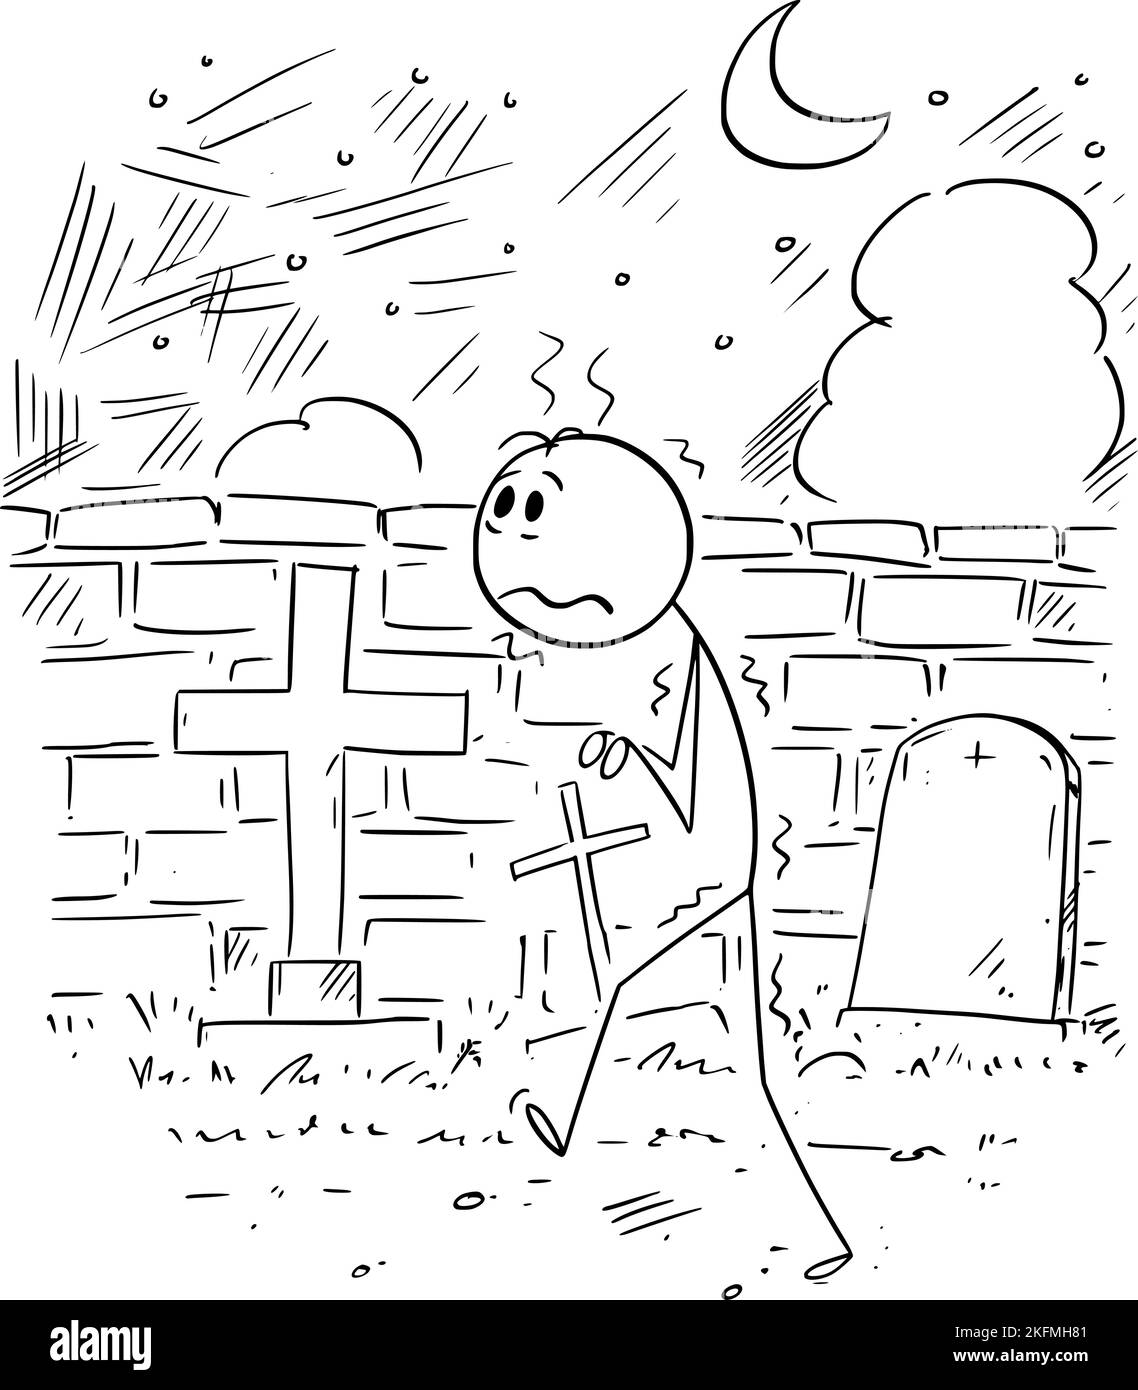 Verängstigte Person auf dem Friedhof, Vektor Cartoon Stick Abbildung Stock Vektor